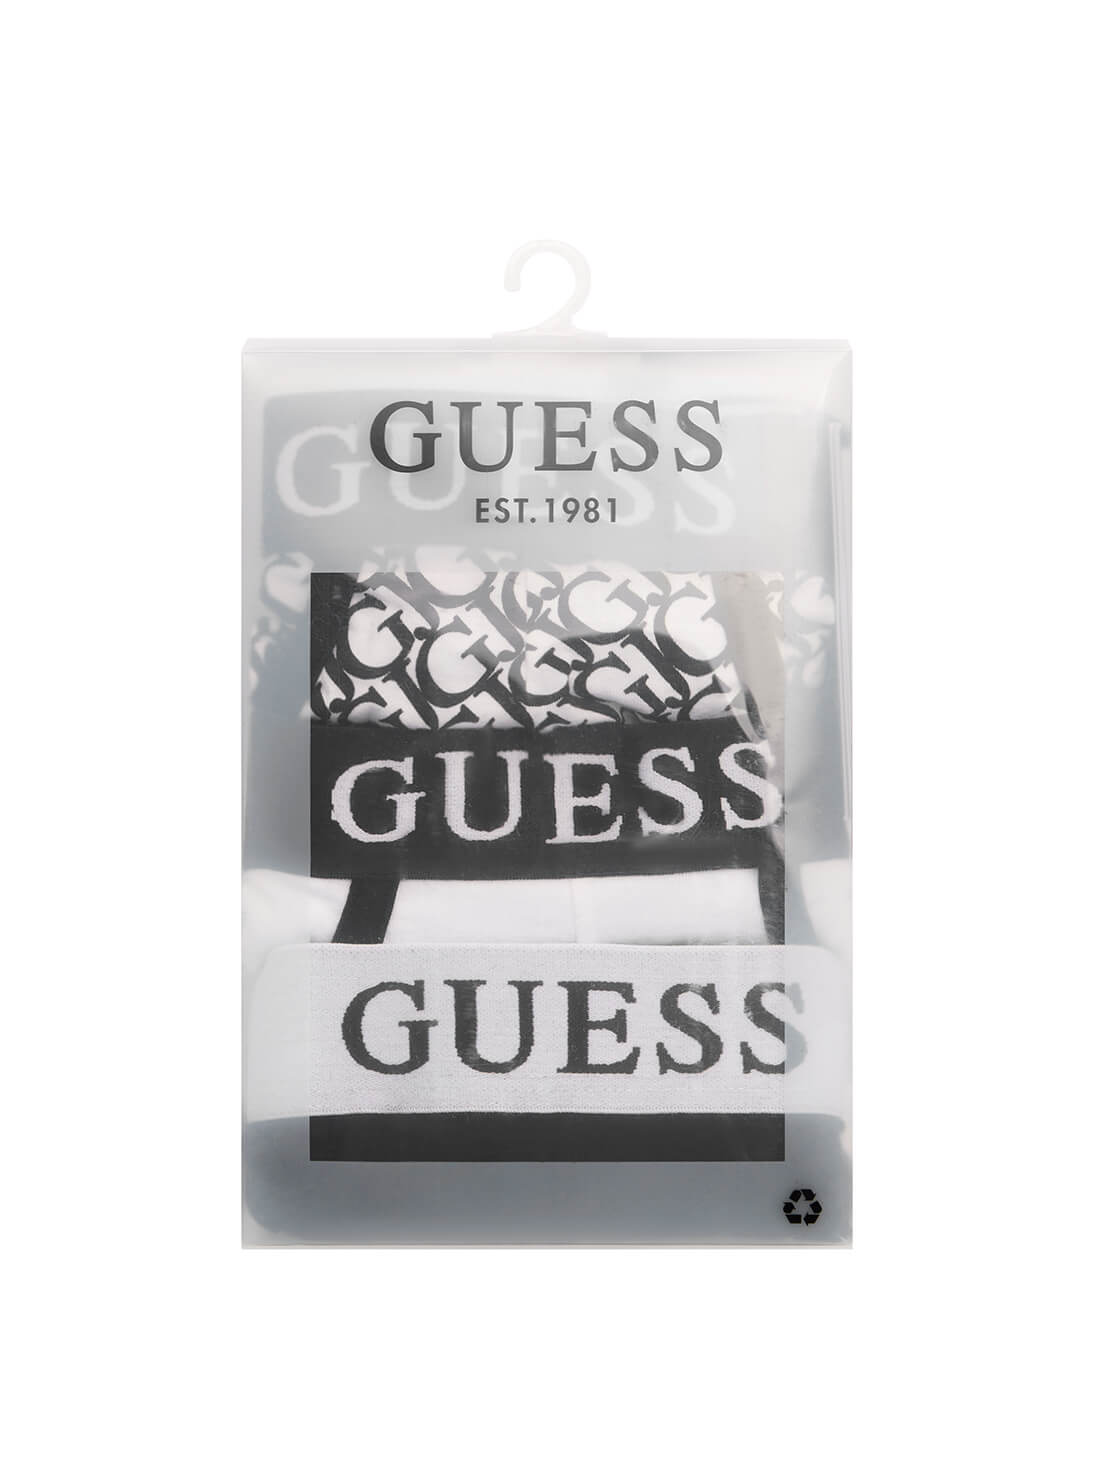 GUESS Mens Black and White Multi 3-Pack Idol Briefs U0BG20K6YW1 Package View